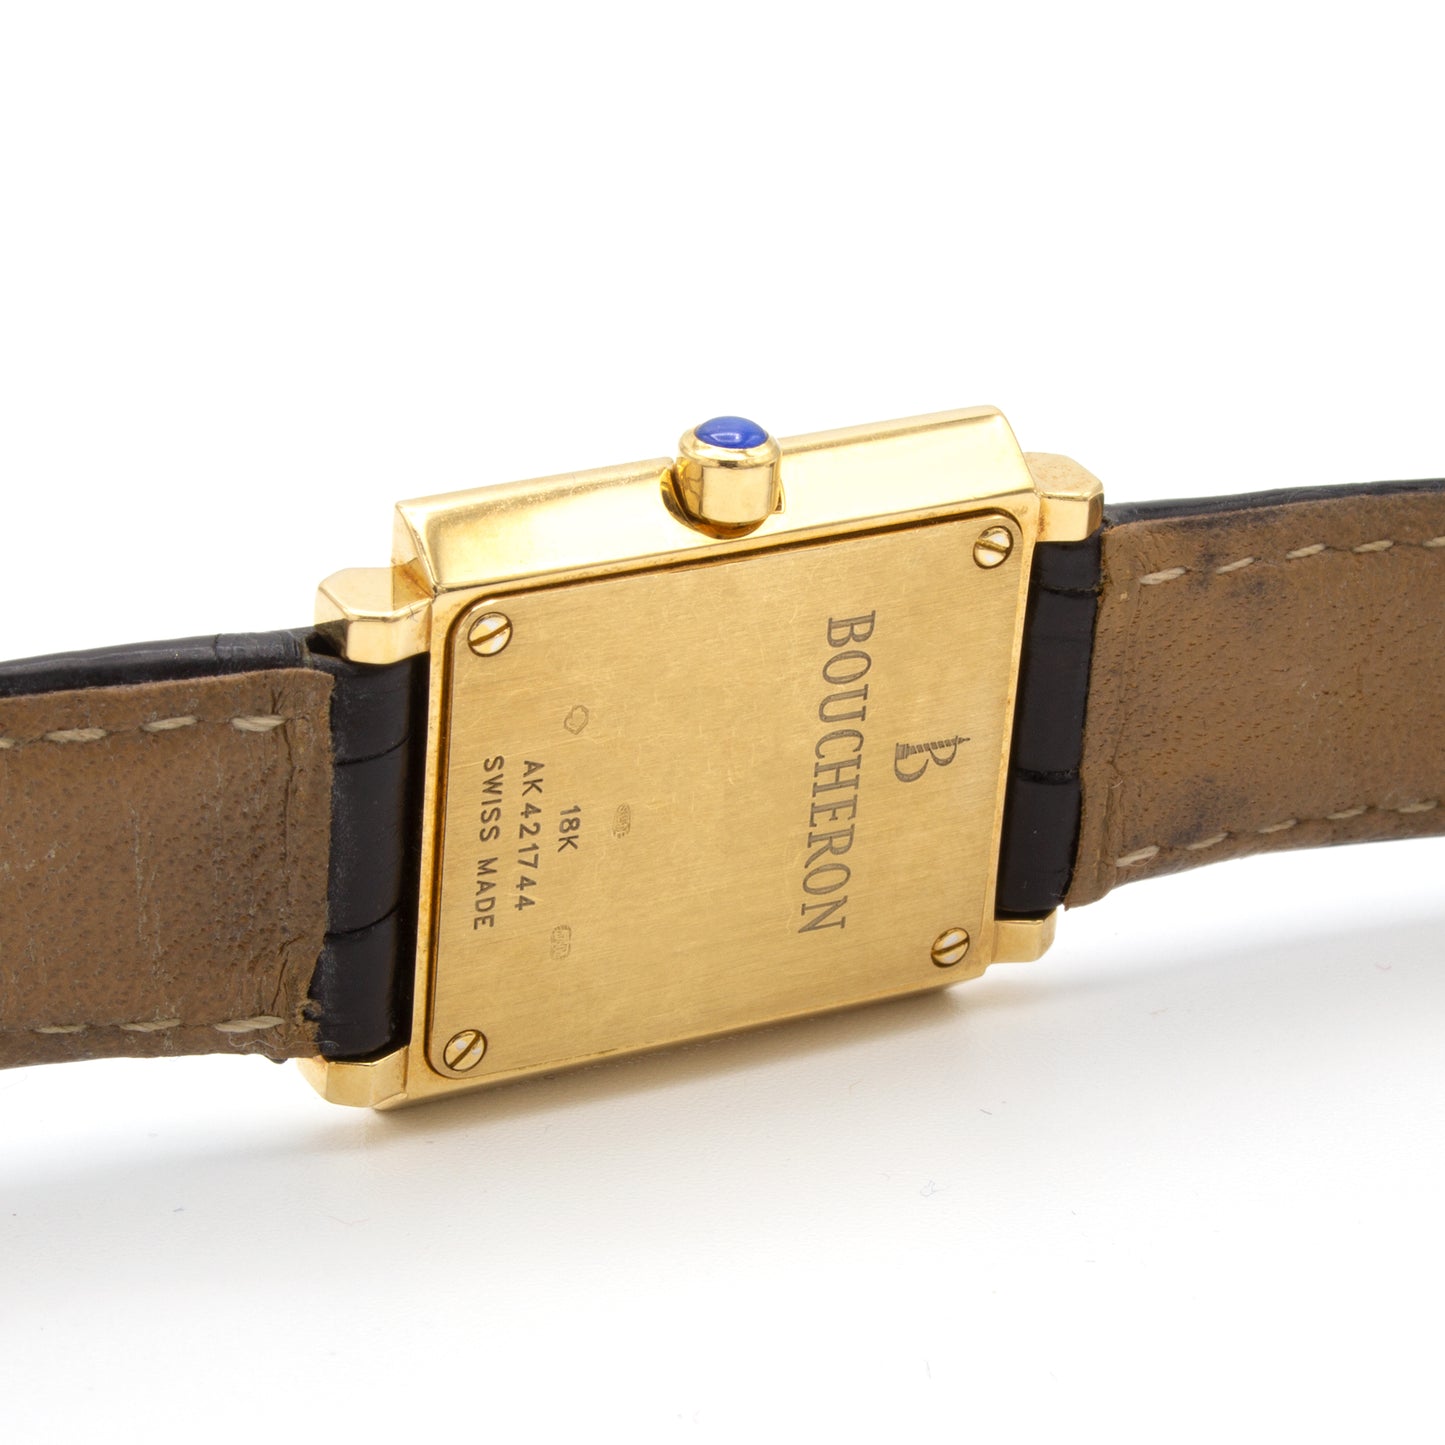 Boucheron 18K yellow gold watch